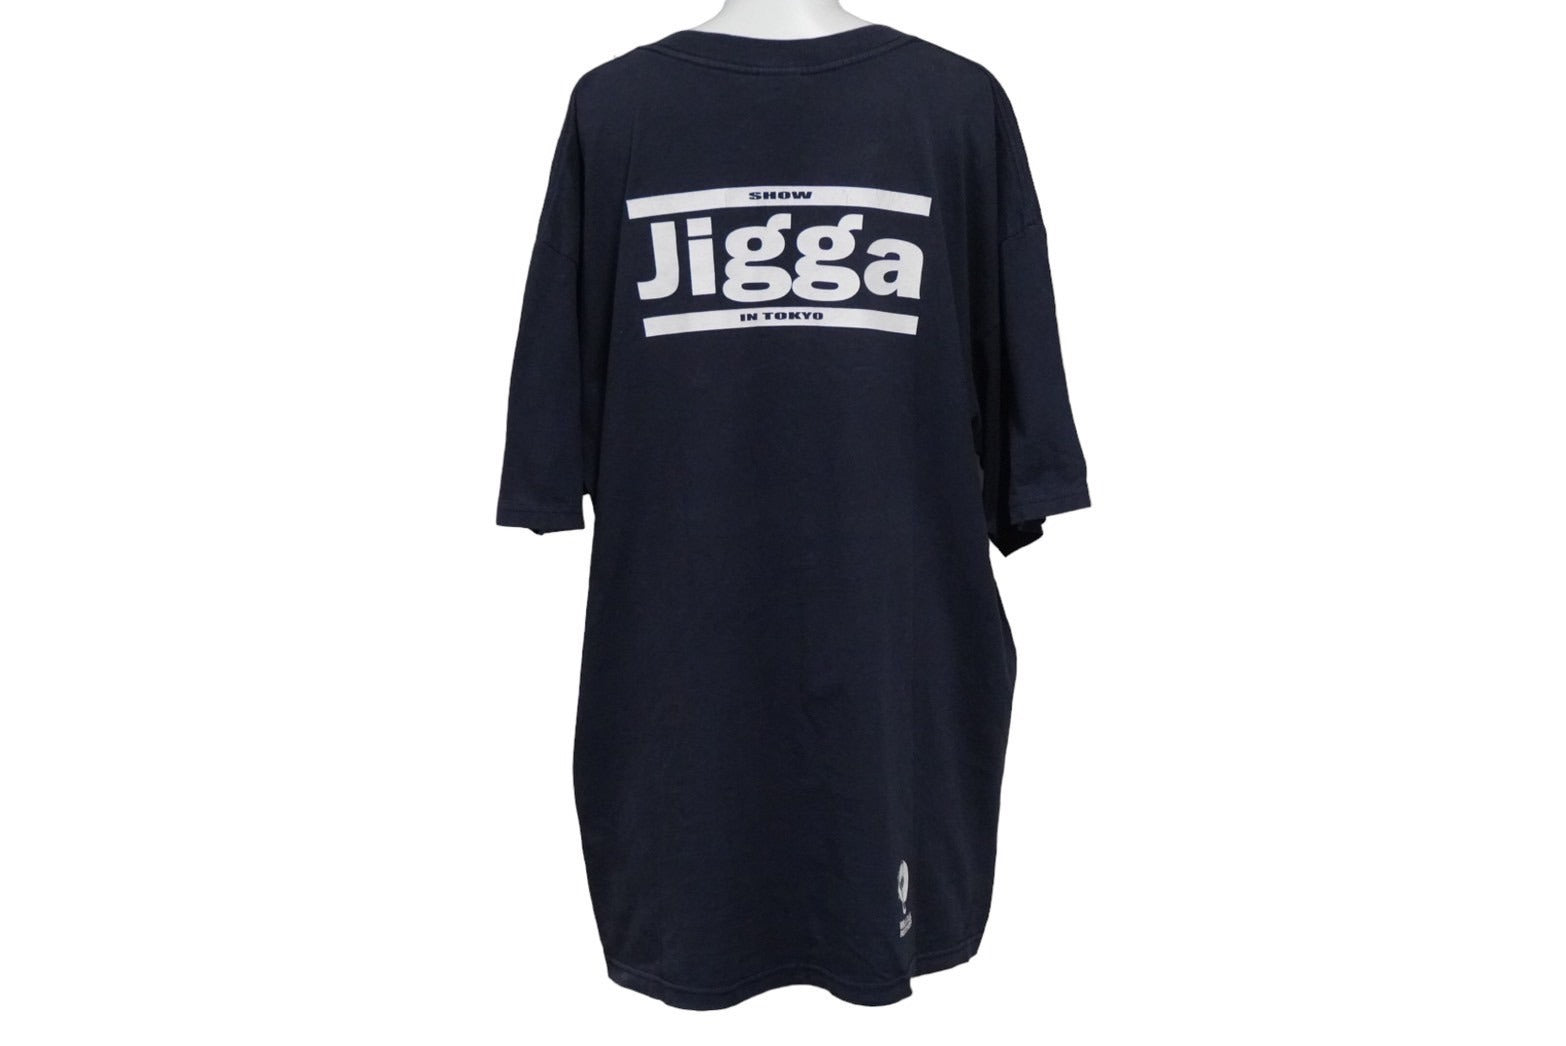 jay-z japan tour 2002 ジェイ-Z vintage ヴィンテージ 半袖 Tシャツ 